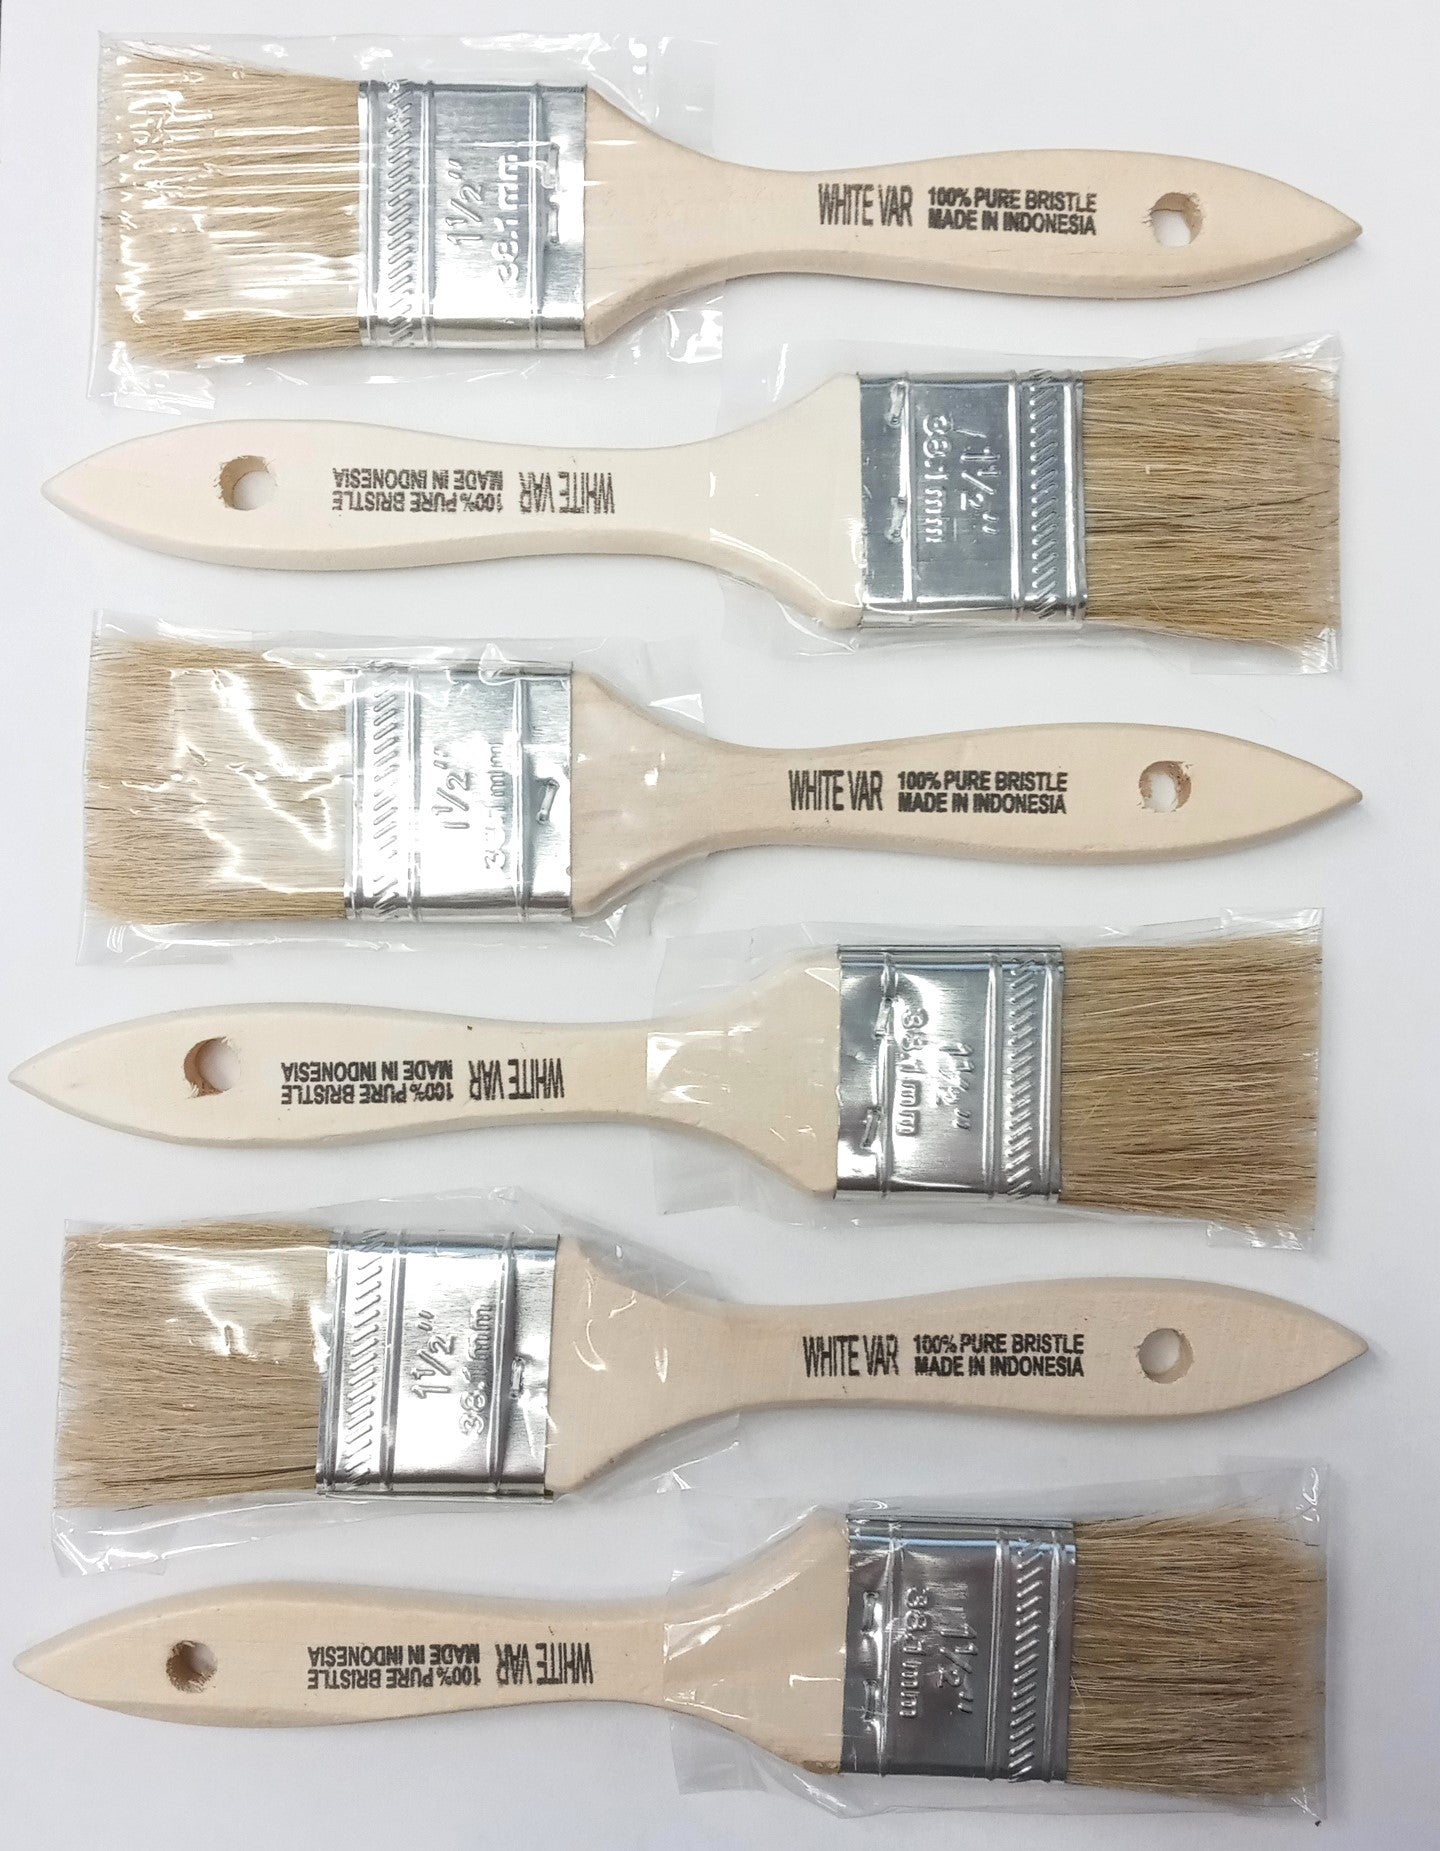 Advance 89697 White VAR 1-1/2" Pure Bristle Chip Paint Brushes 6pcs.